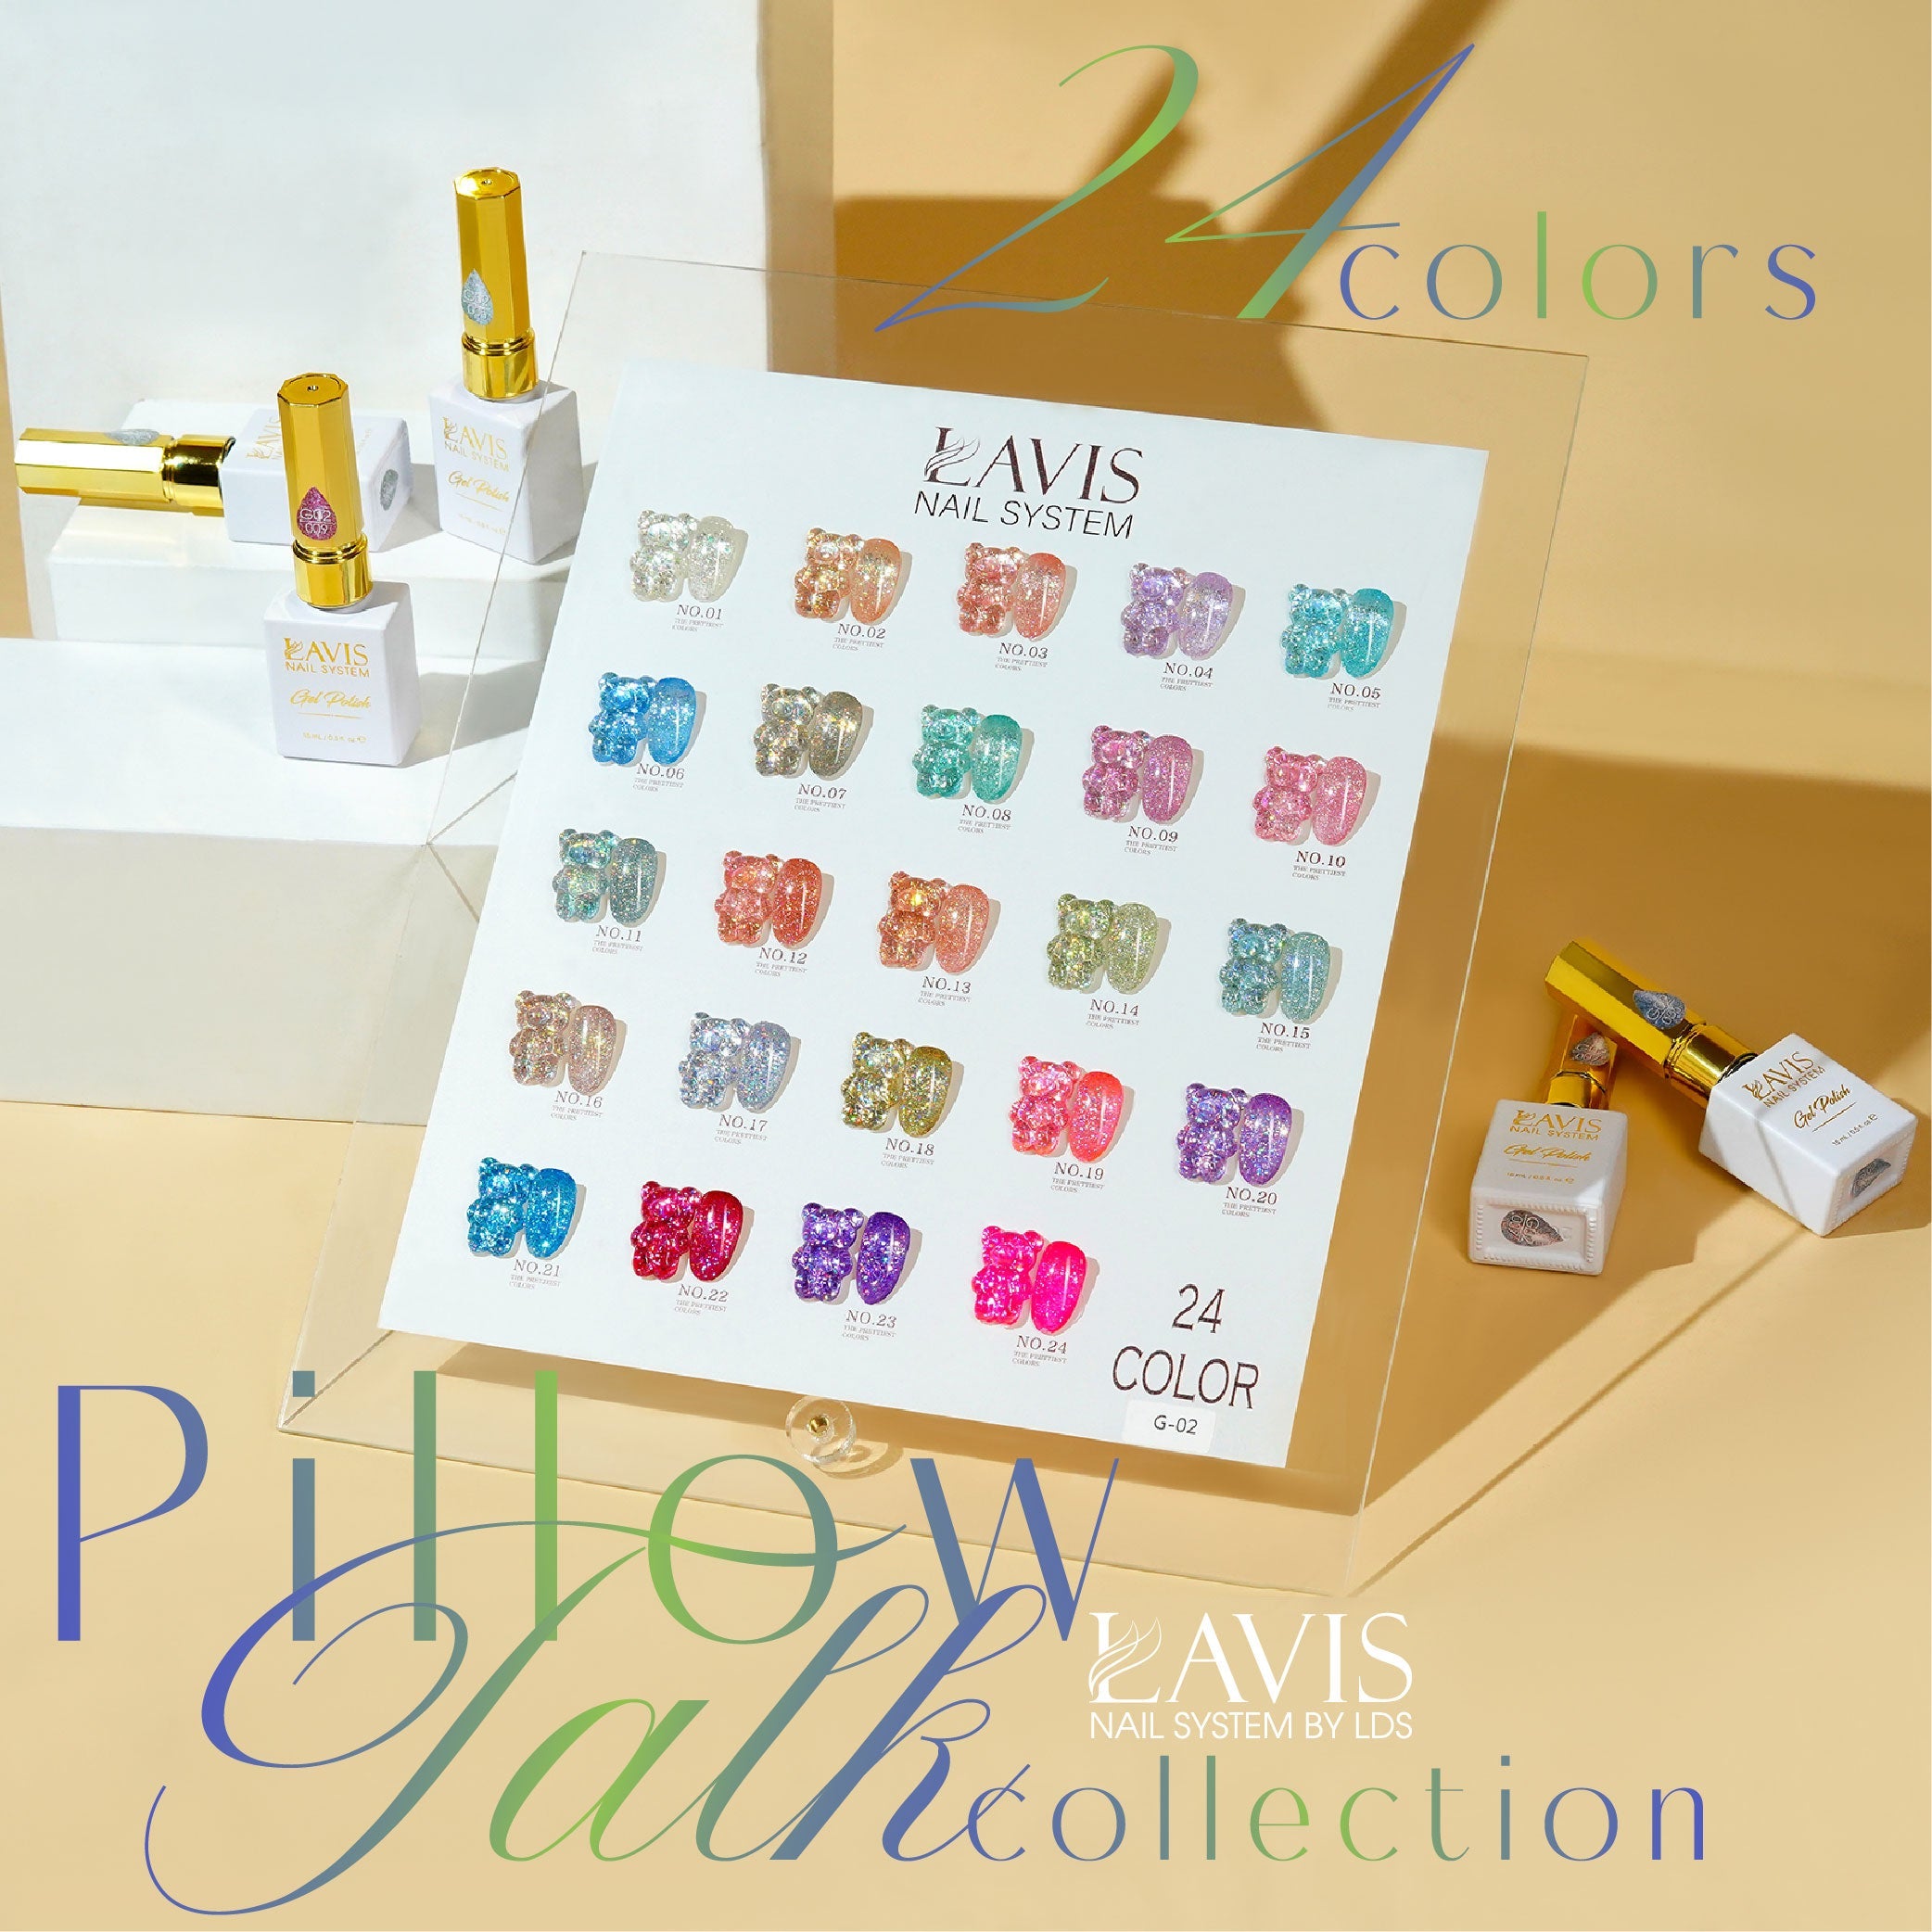 LAVIS Glitter G02 - 10 - Gel Polish 0.5 oz - Pillow Talk Collection